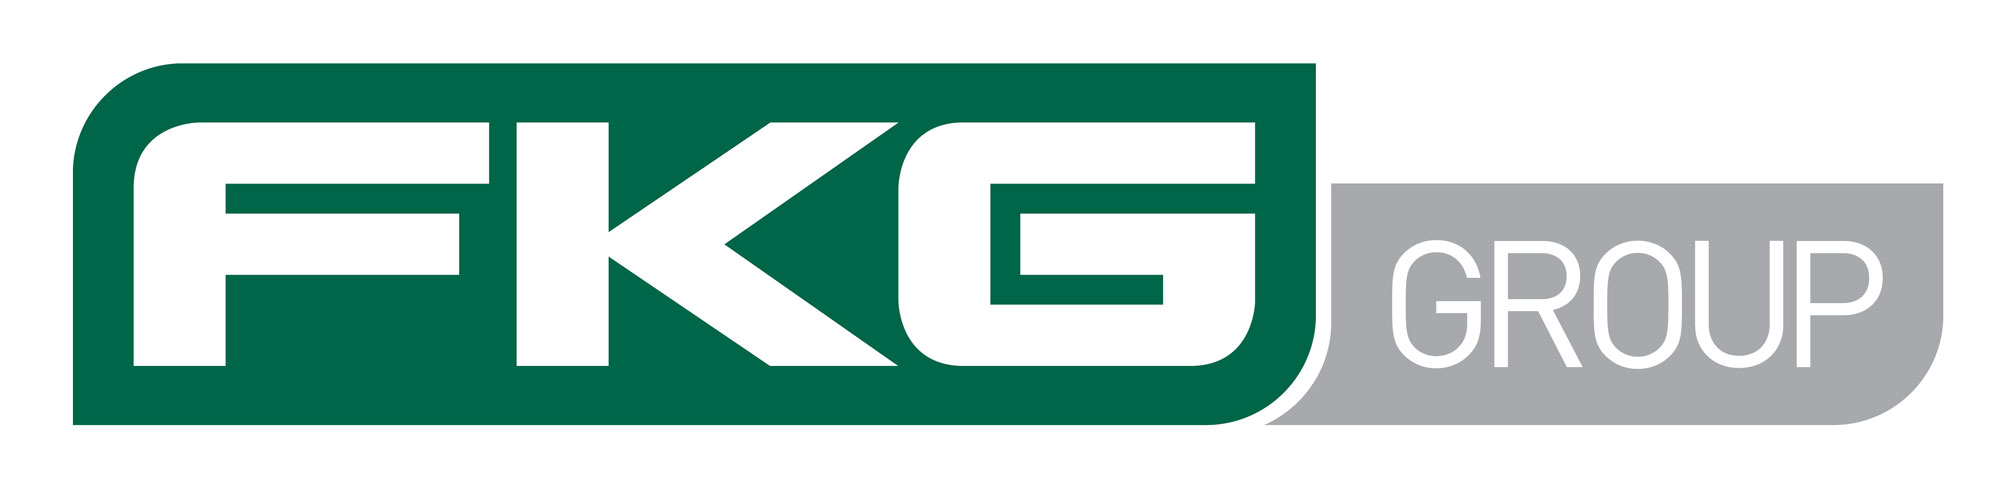 FKG Group Logo